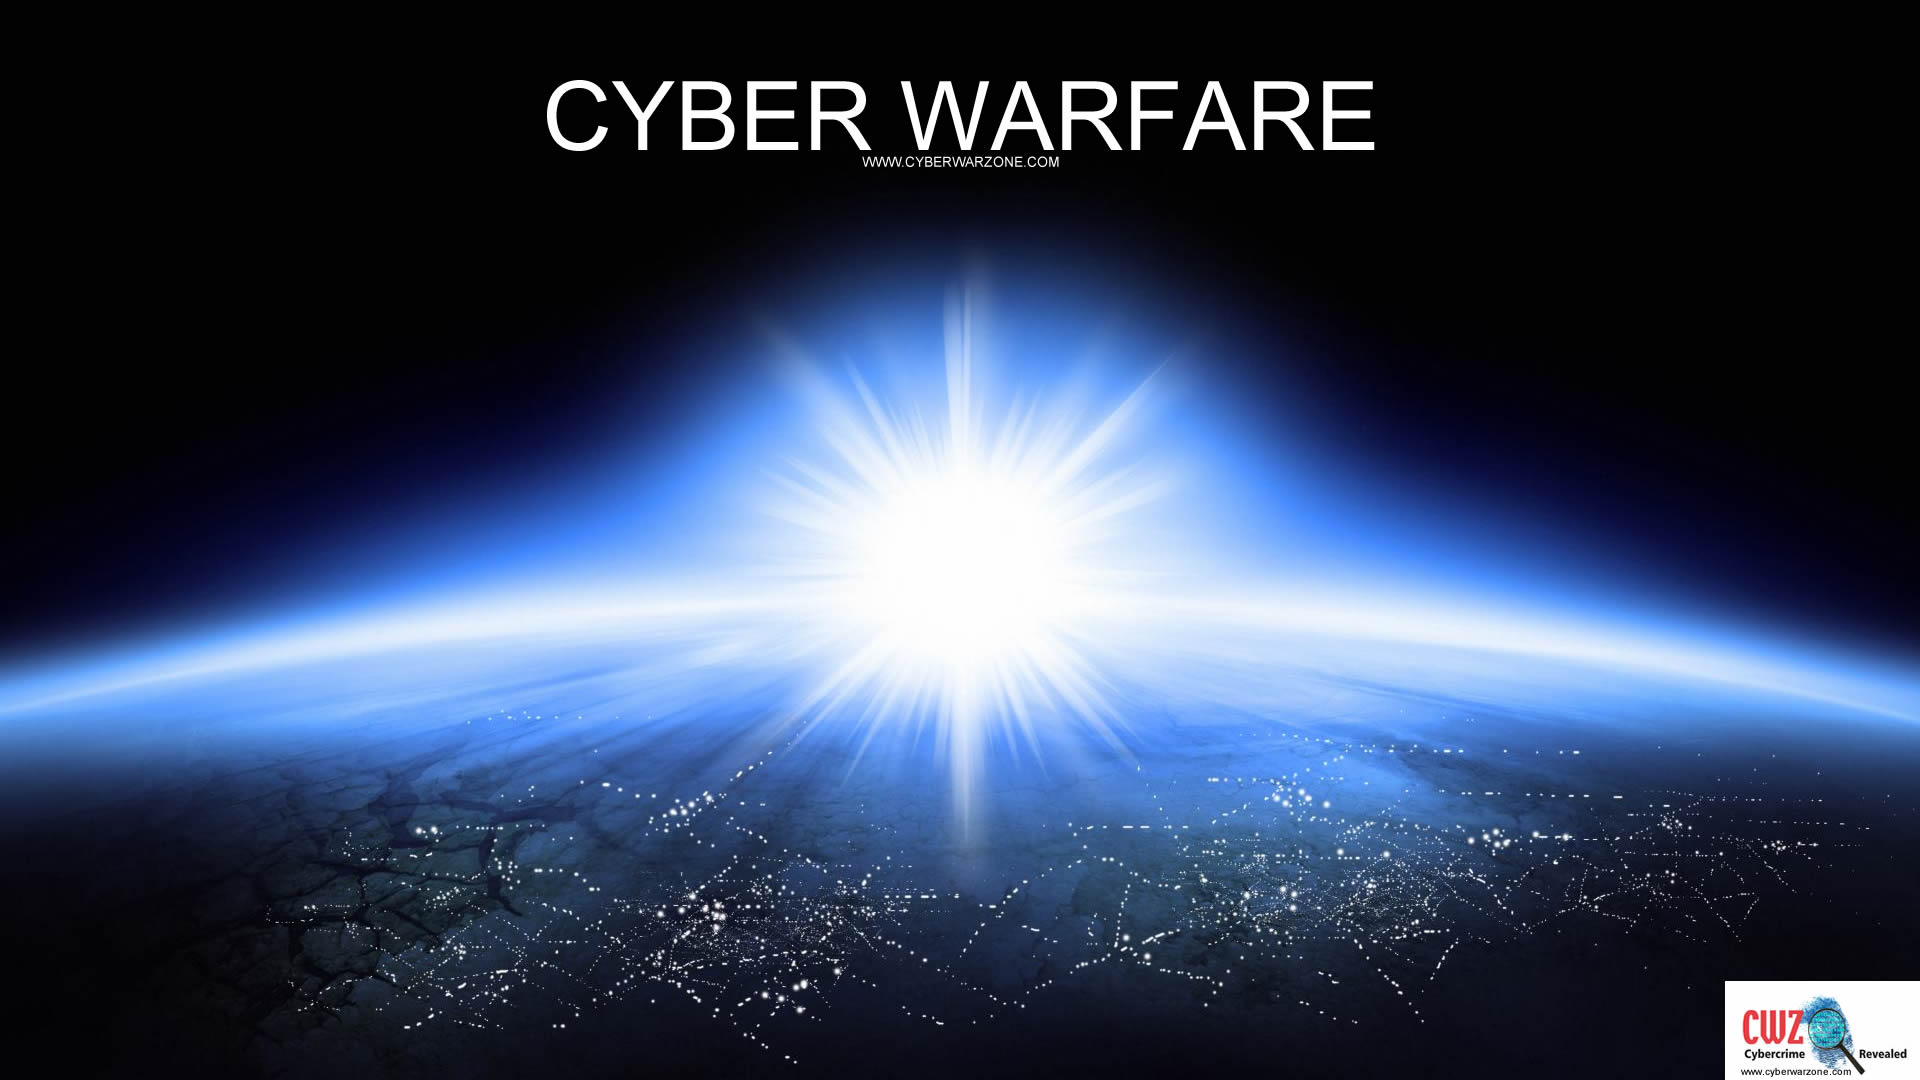 Free download Cyber warfare wallpaper Cyberwarzone [1920x1080] for your Desktop, Mobile & Tablet. Explore Intel Security Wallpaper. Intel Wallpaper, Intel Extreme Wallpaper, Intel Core Wallpaper